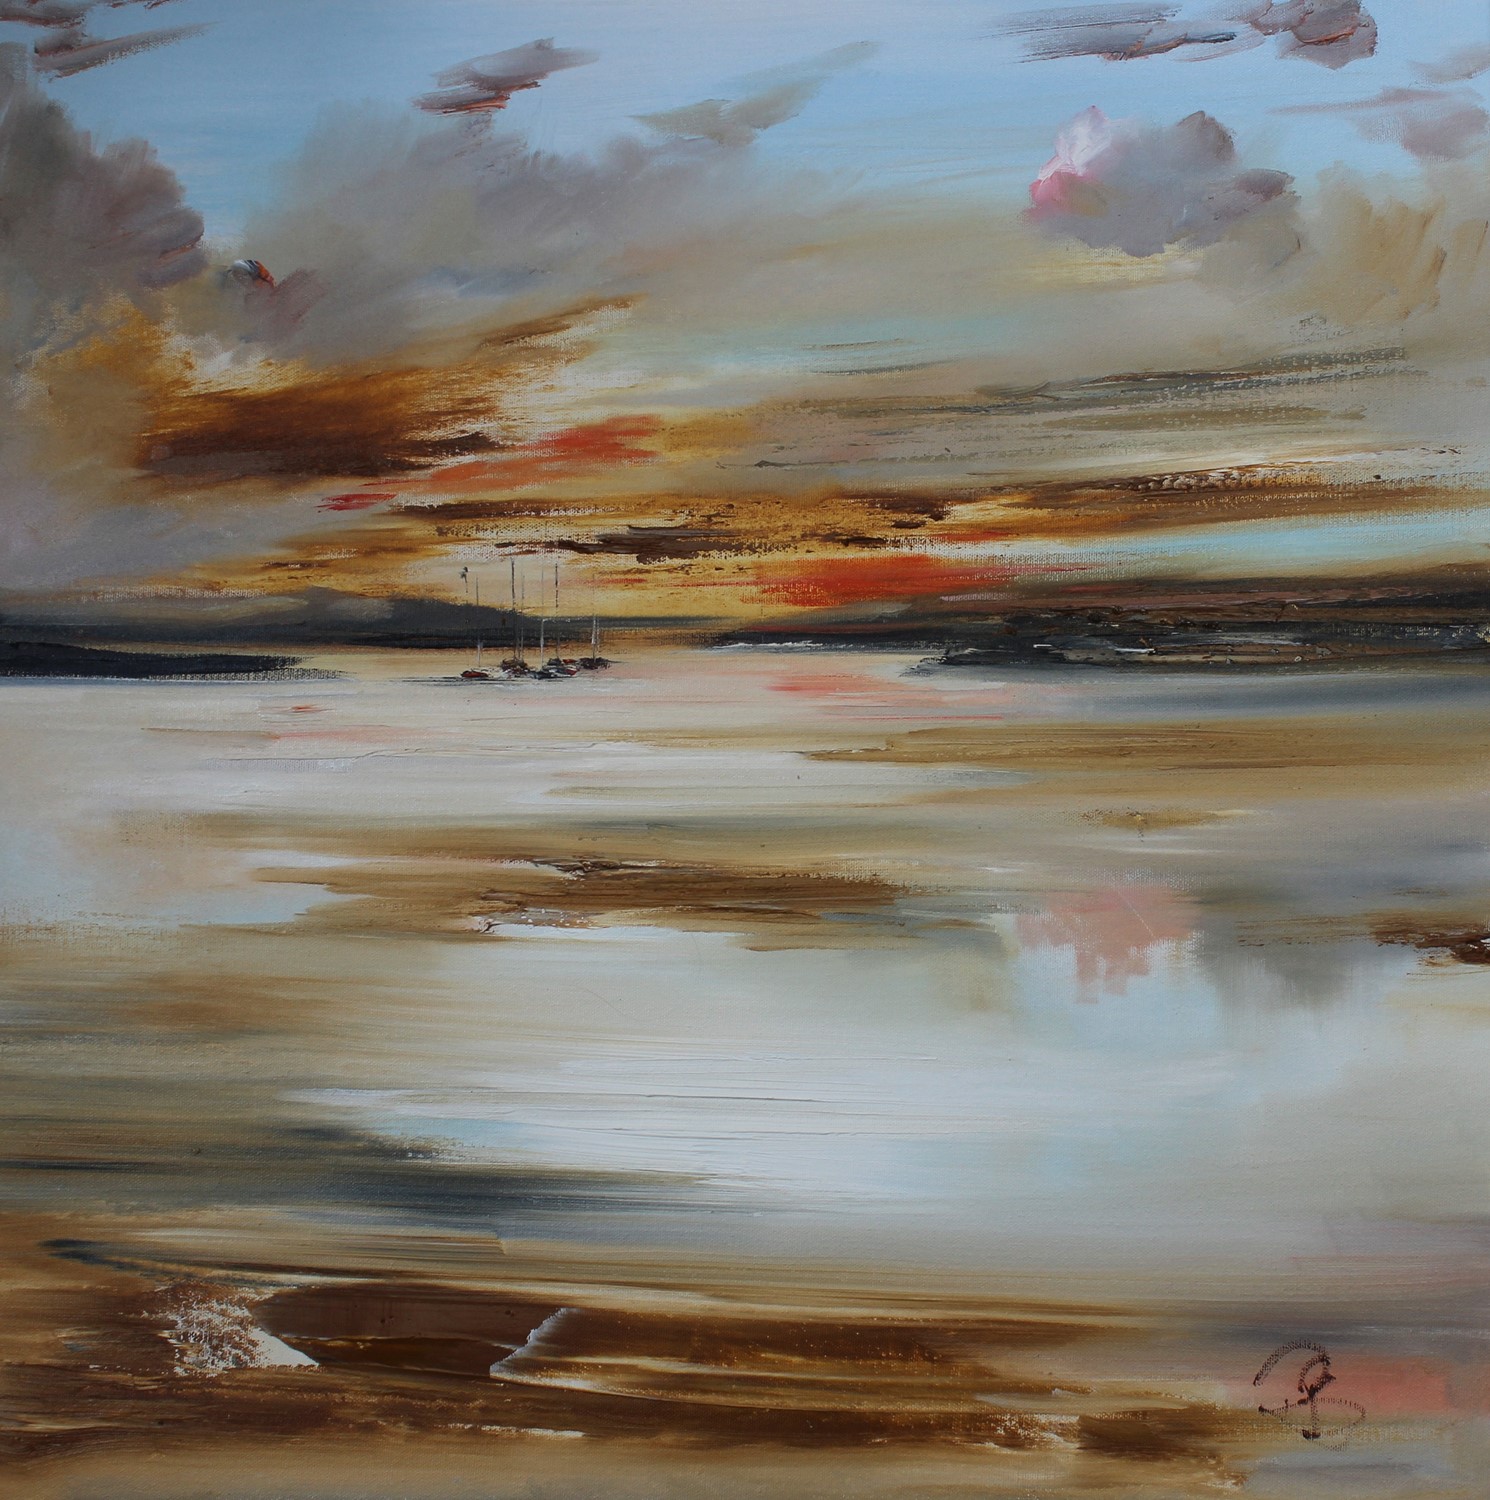 'Sun Clouds on the West Coast' by artist Rosanne Barr